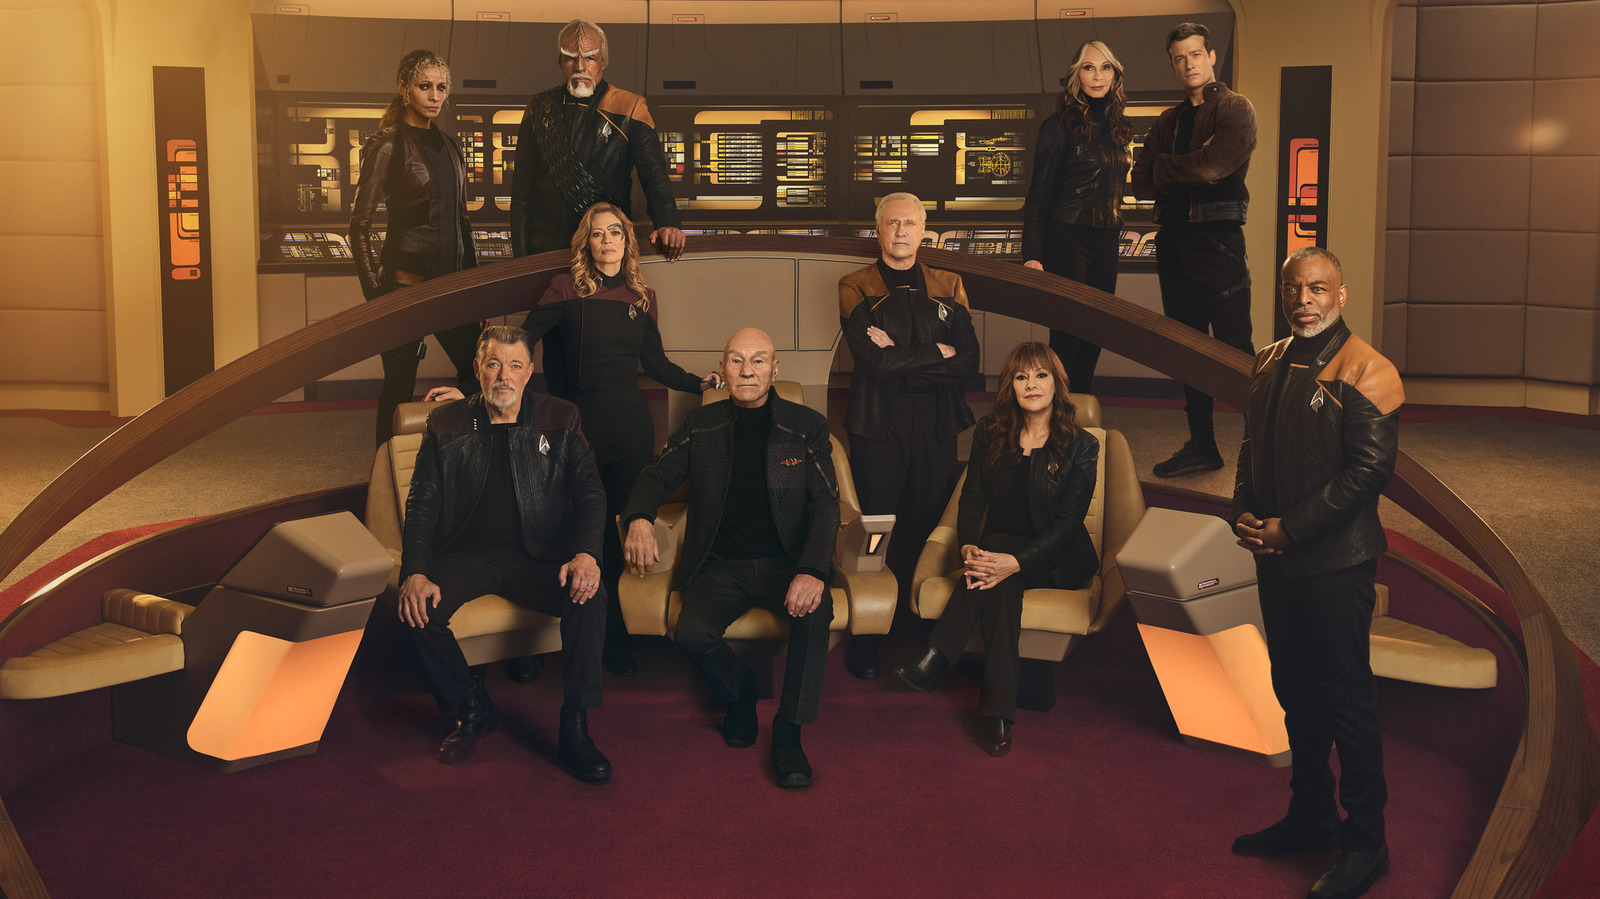 Every Major Character In Star Trek: Picard Season 3, Ranked Worst